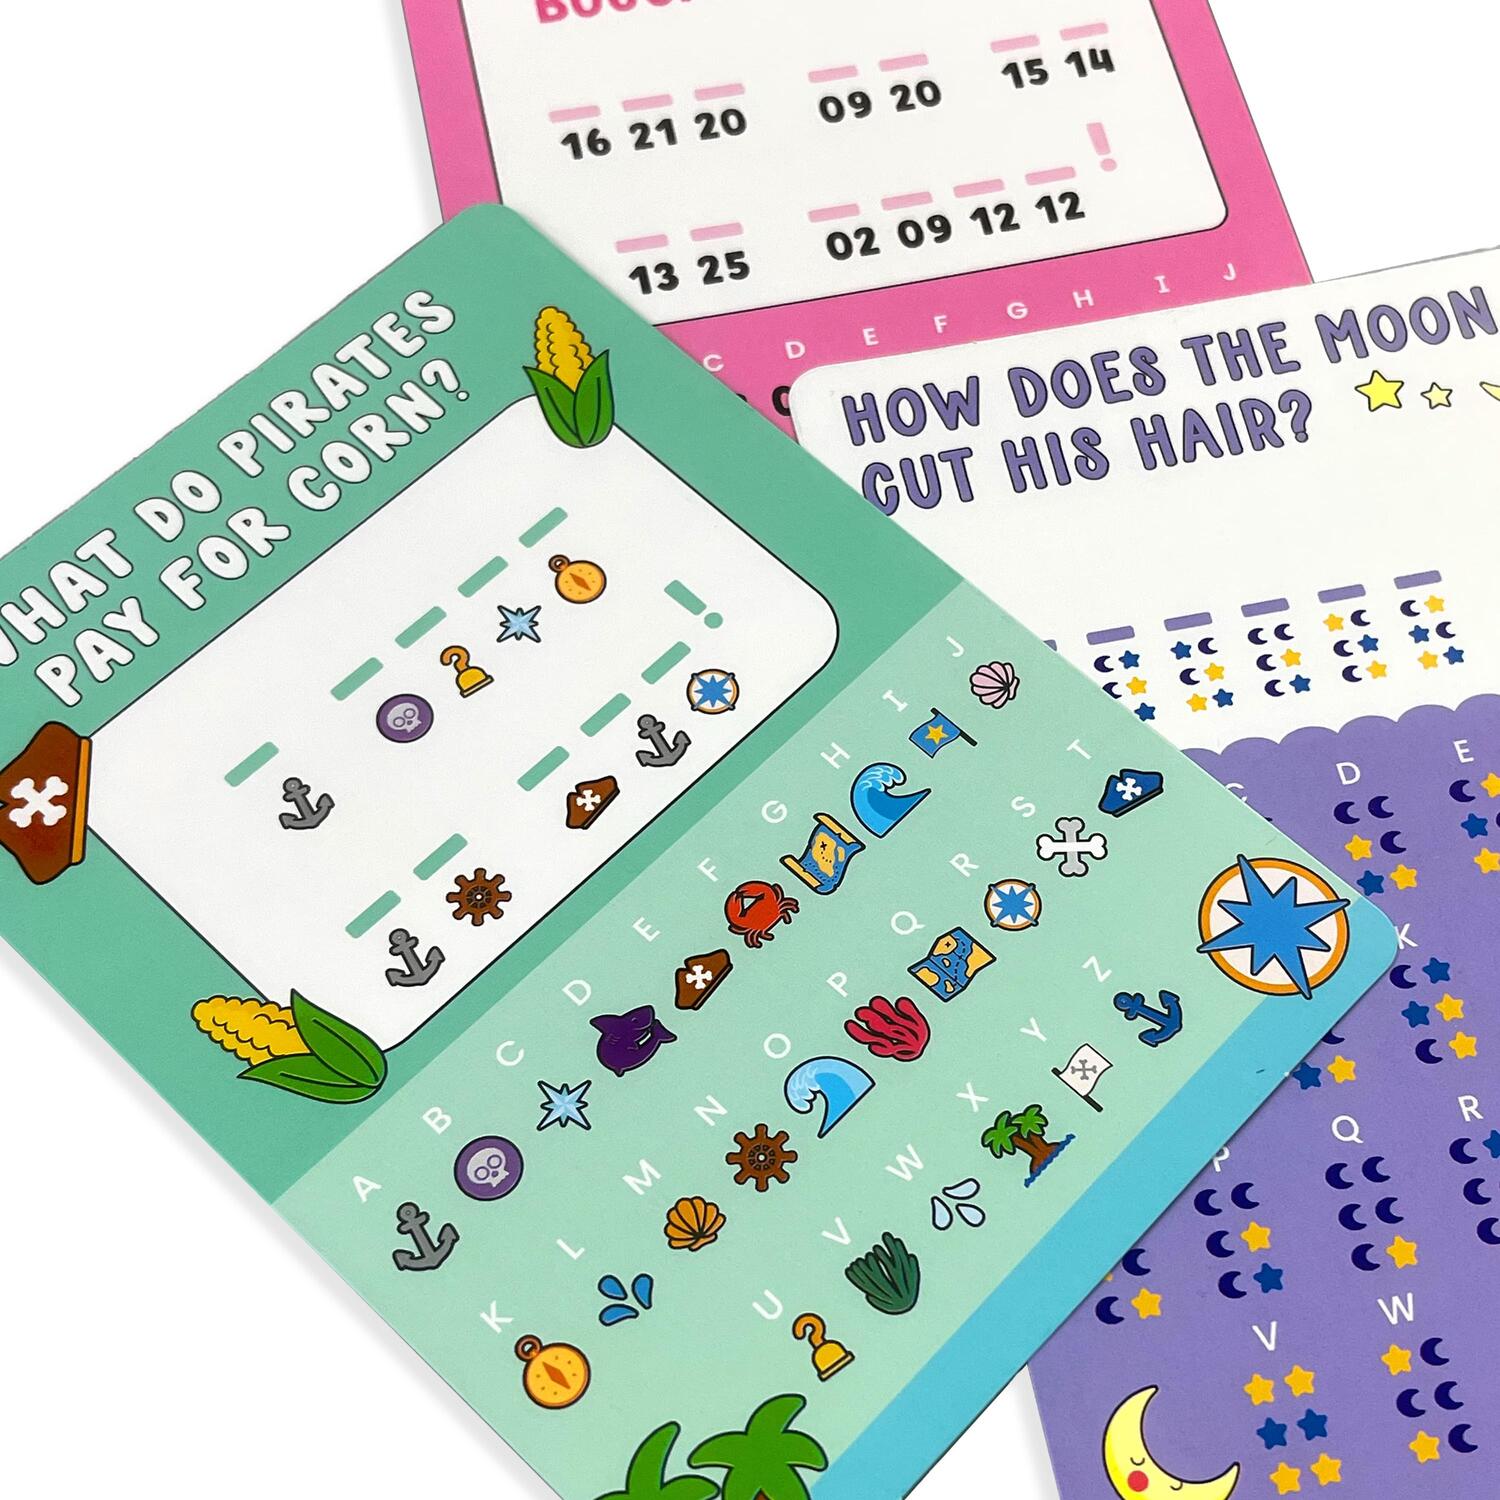 Paper Games: Joke Decoder Activity Cards - Set of 24